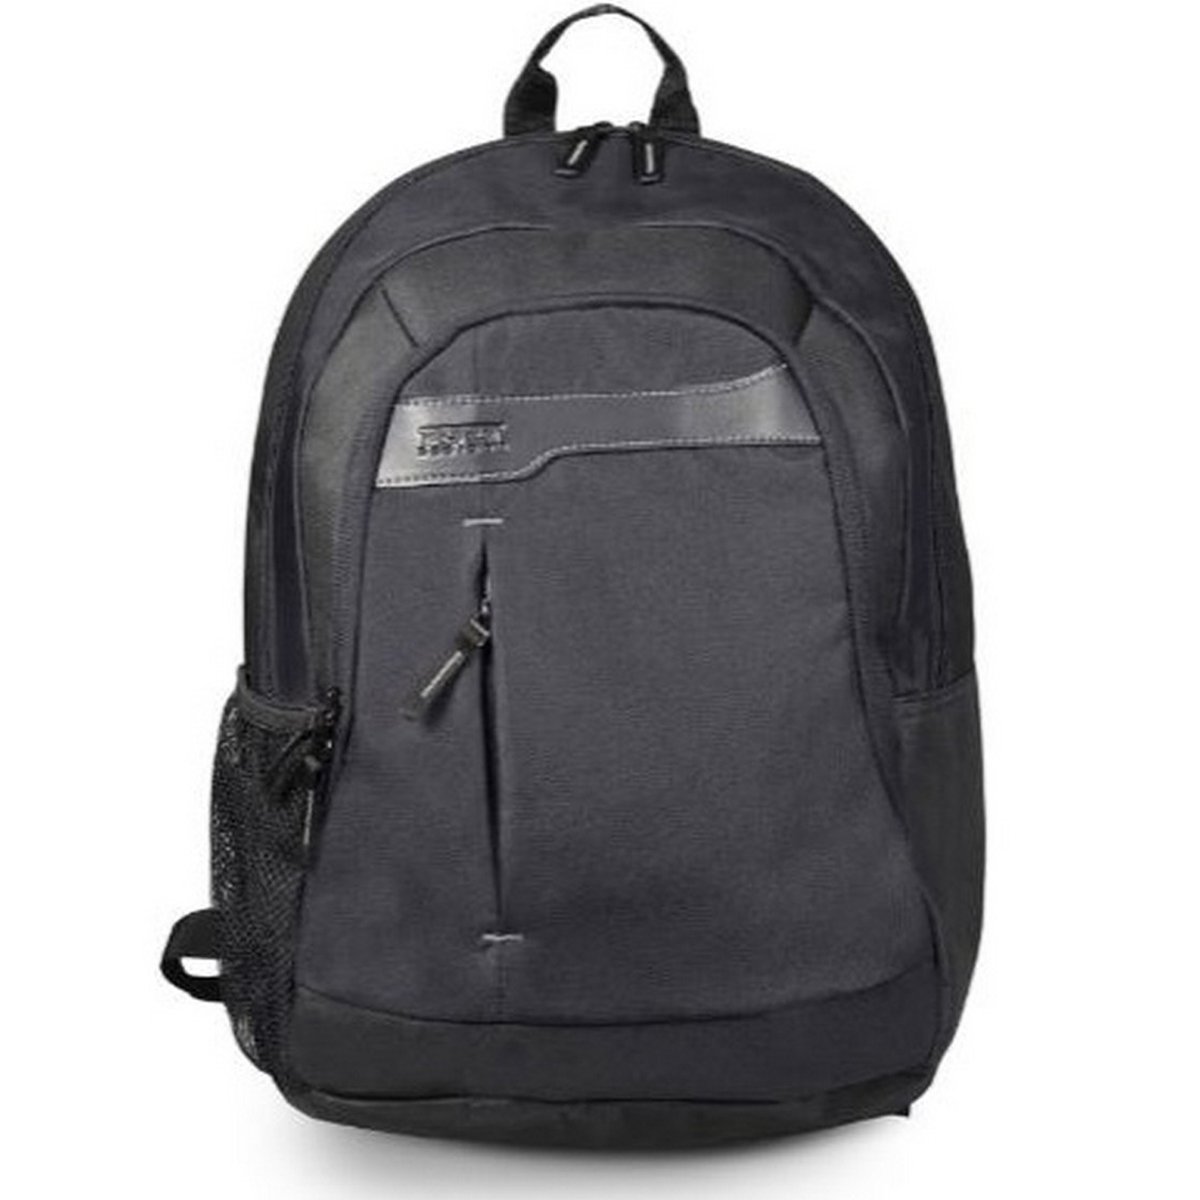 Port Laptop Backpack 105320 15.6inch